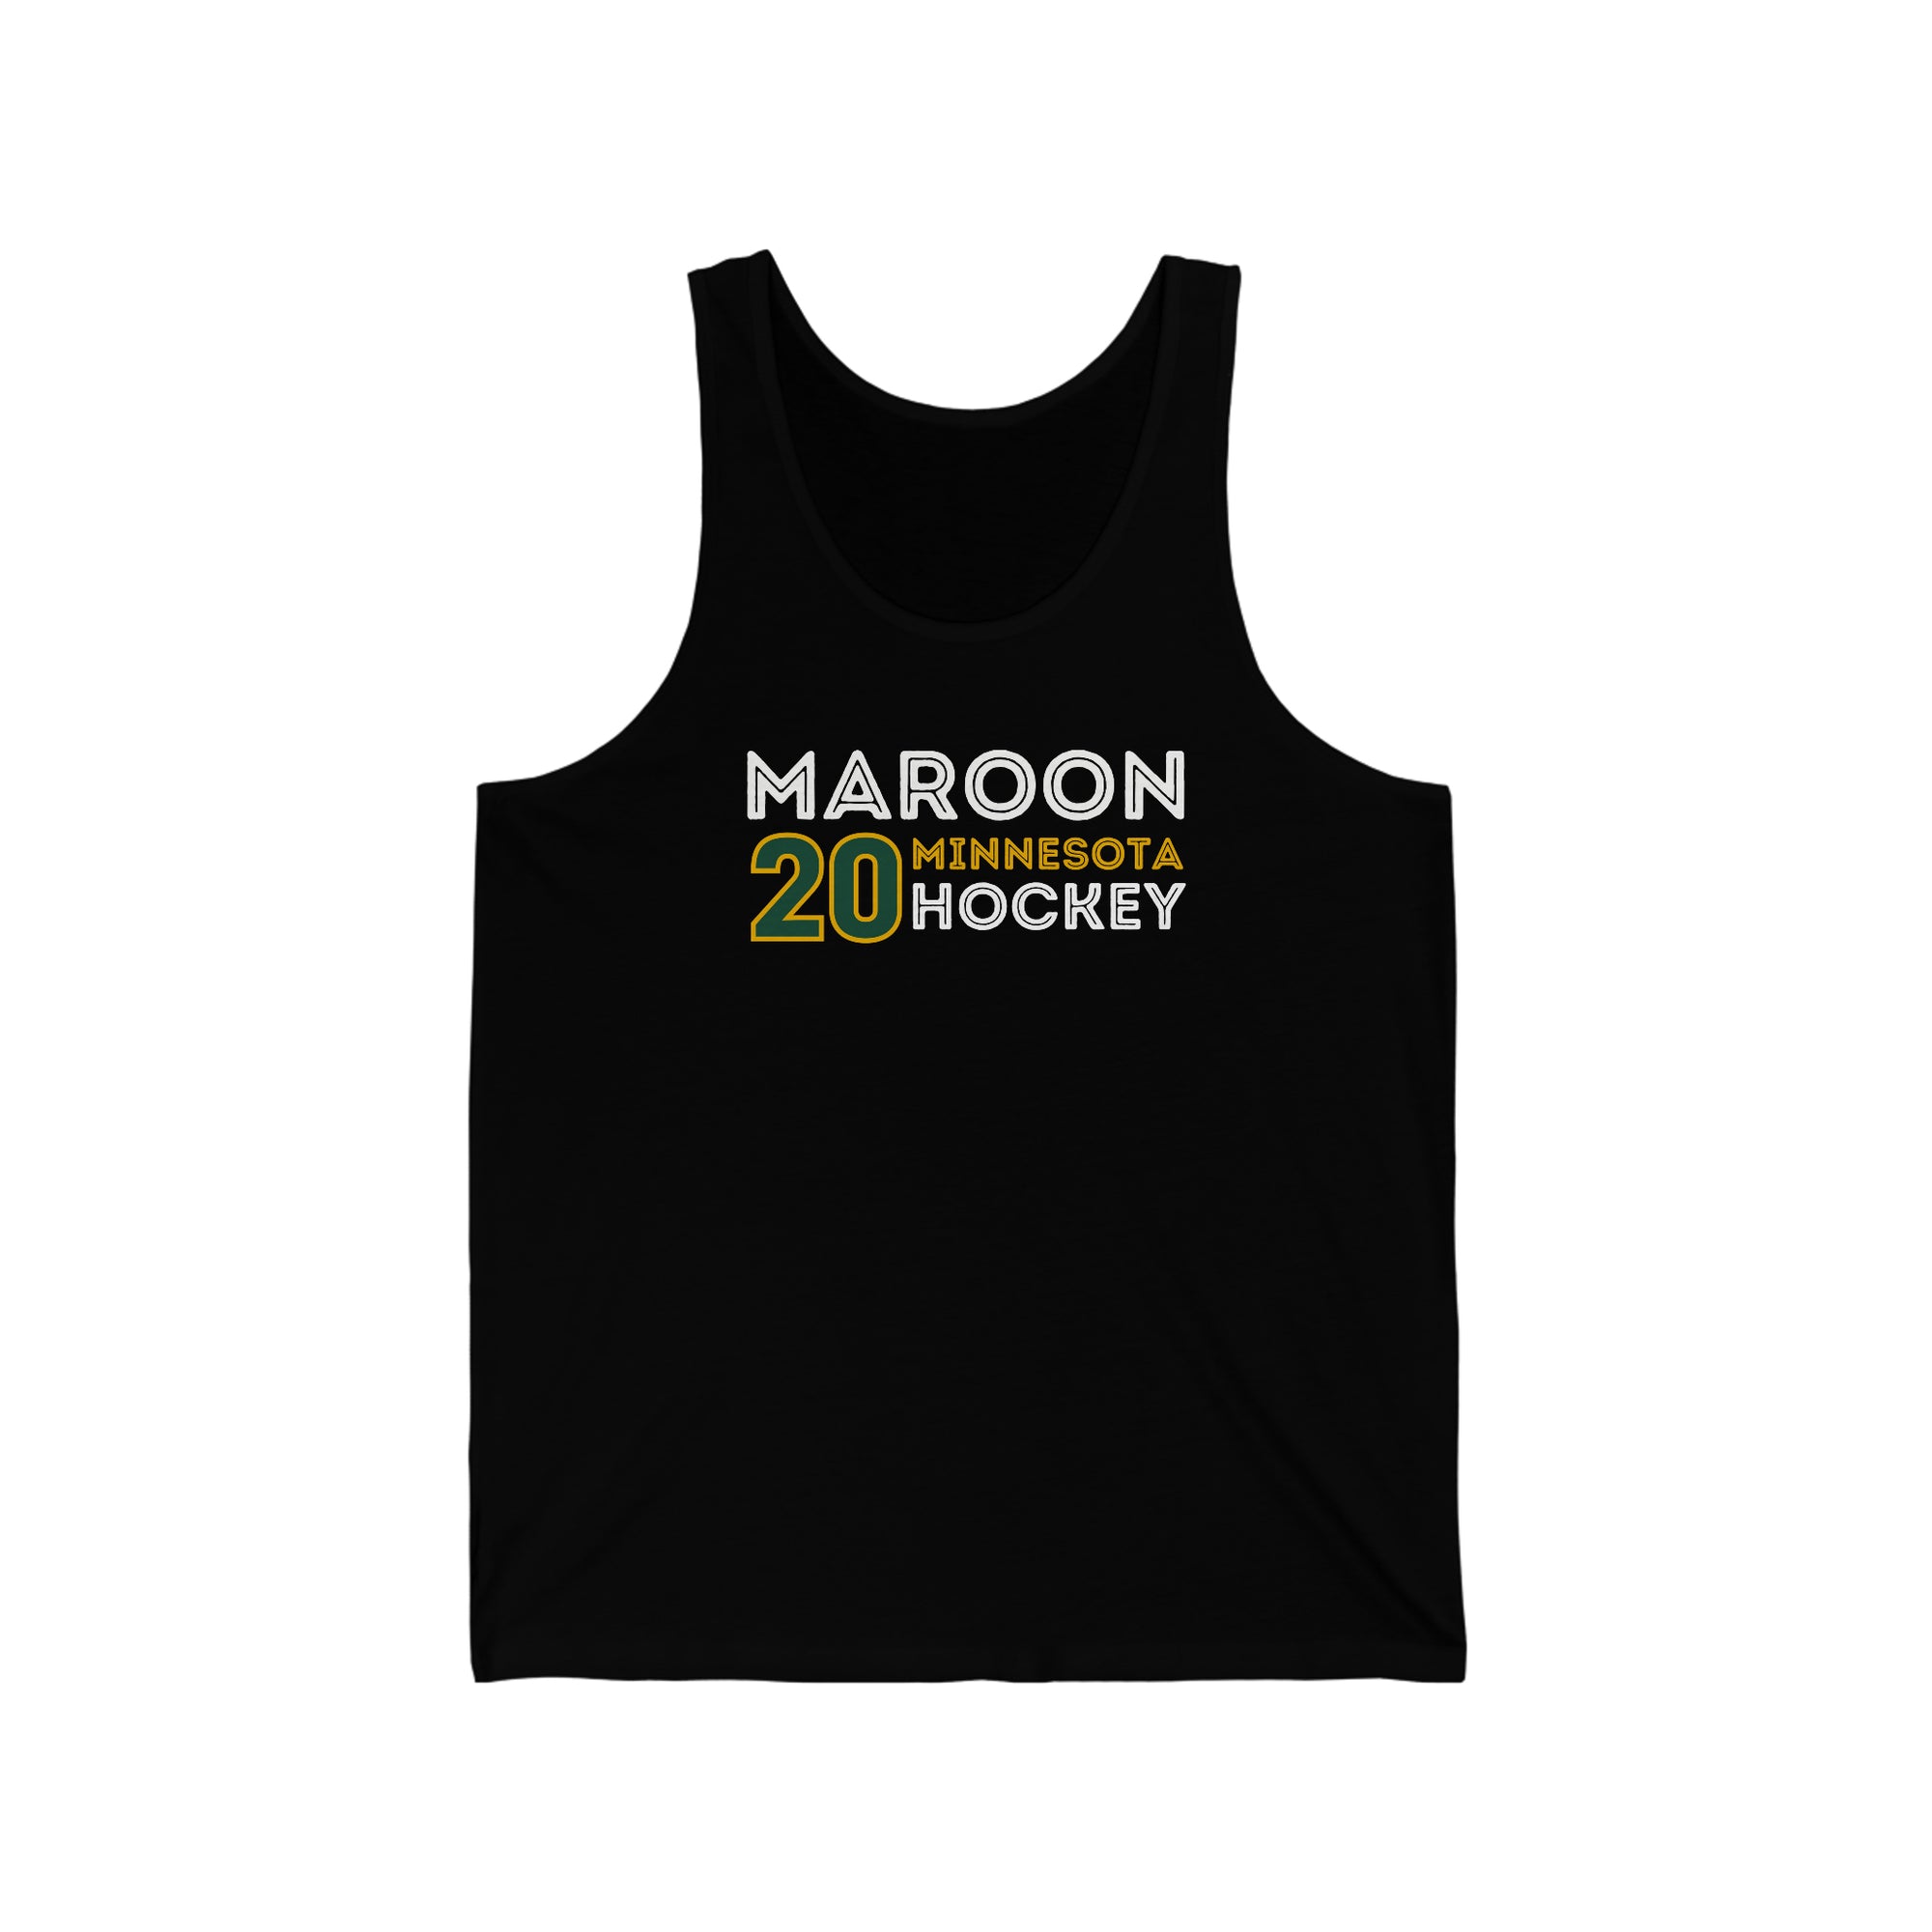 Maroon 20 Minnesota Hockey Grafitti Wall Design Unisex Jersey Tank Top